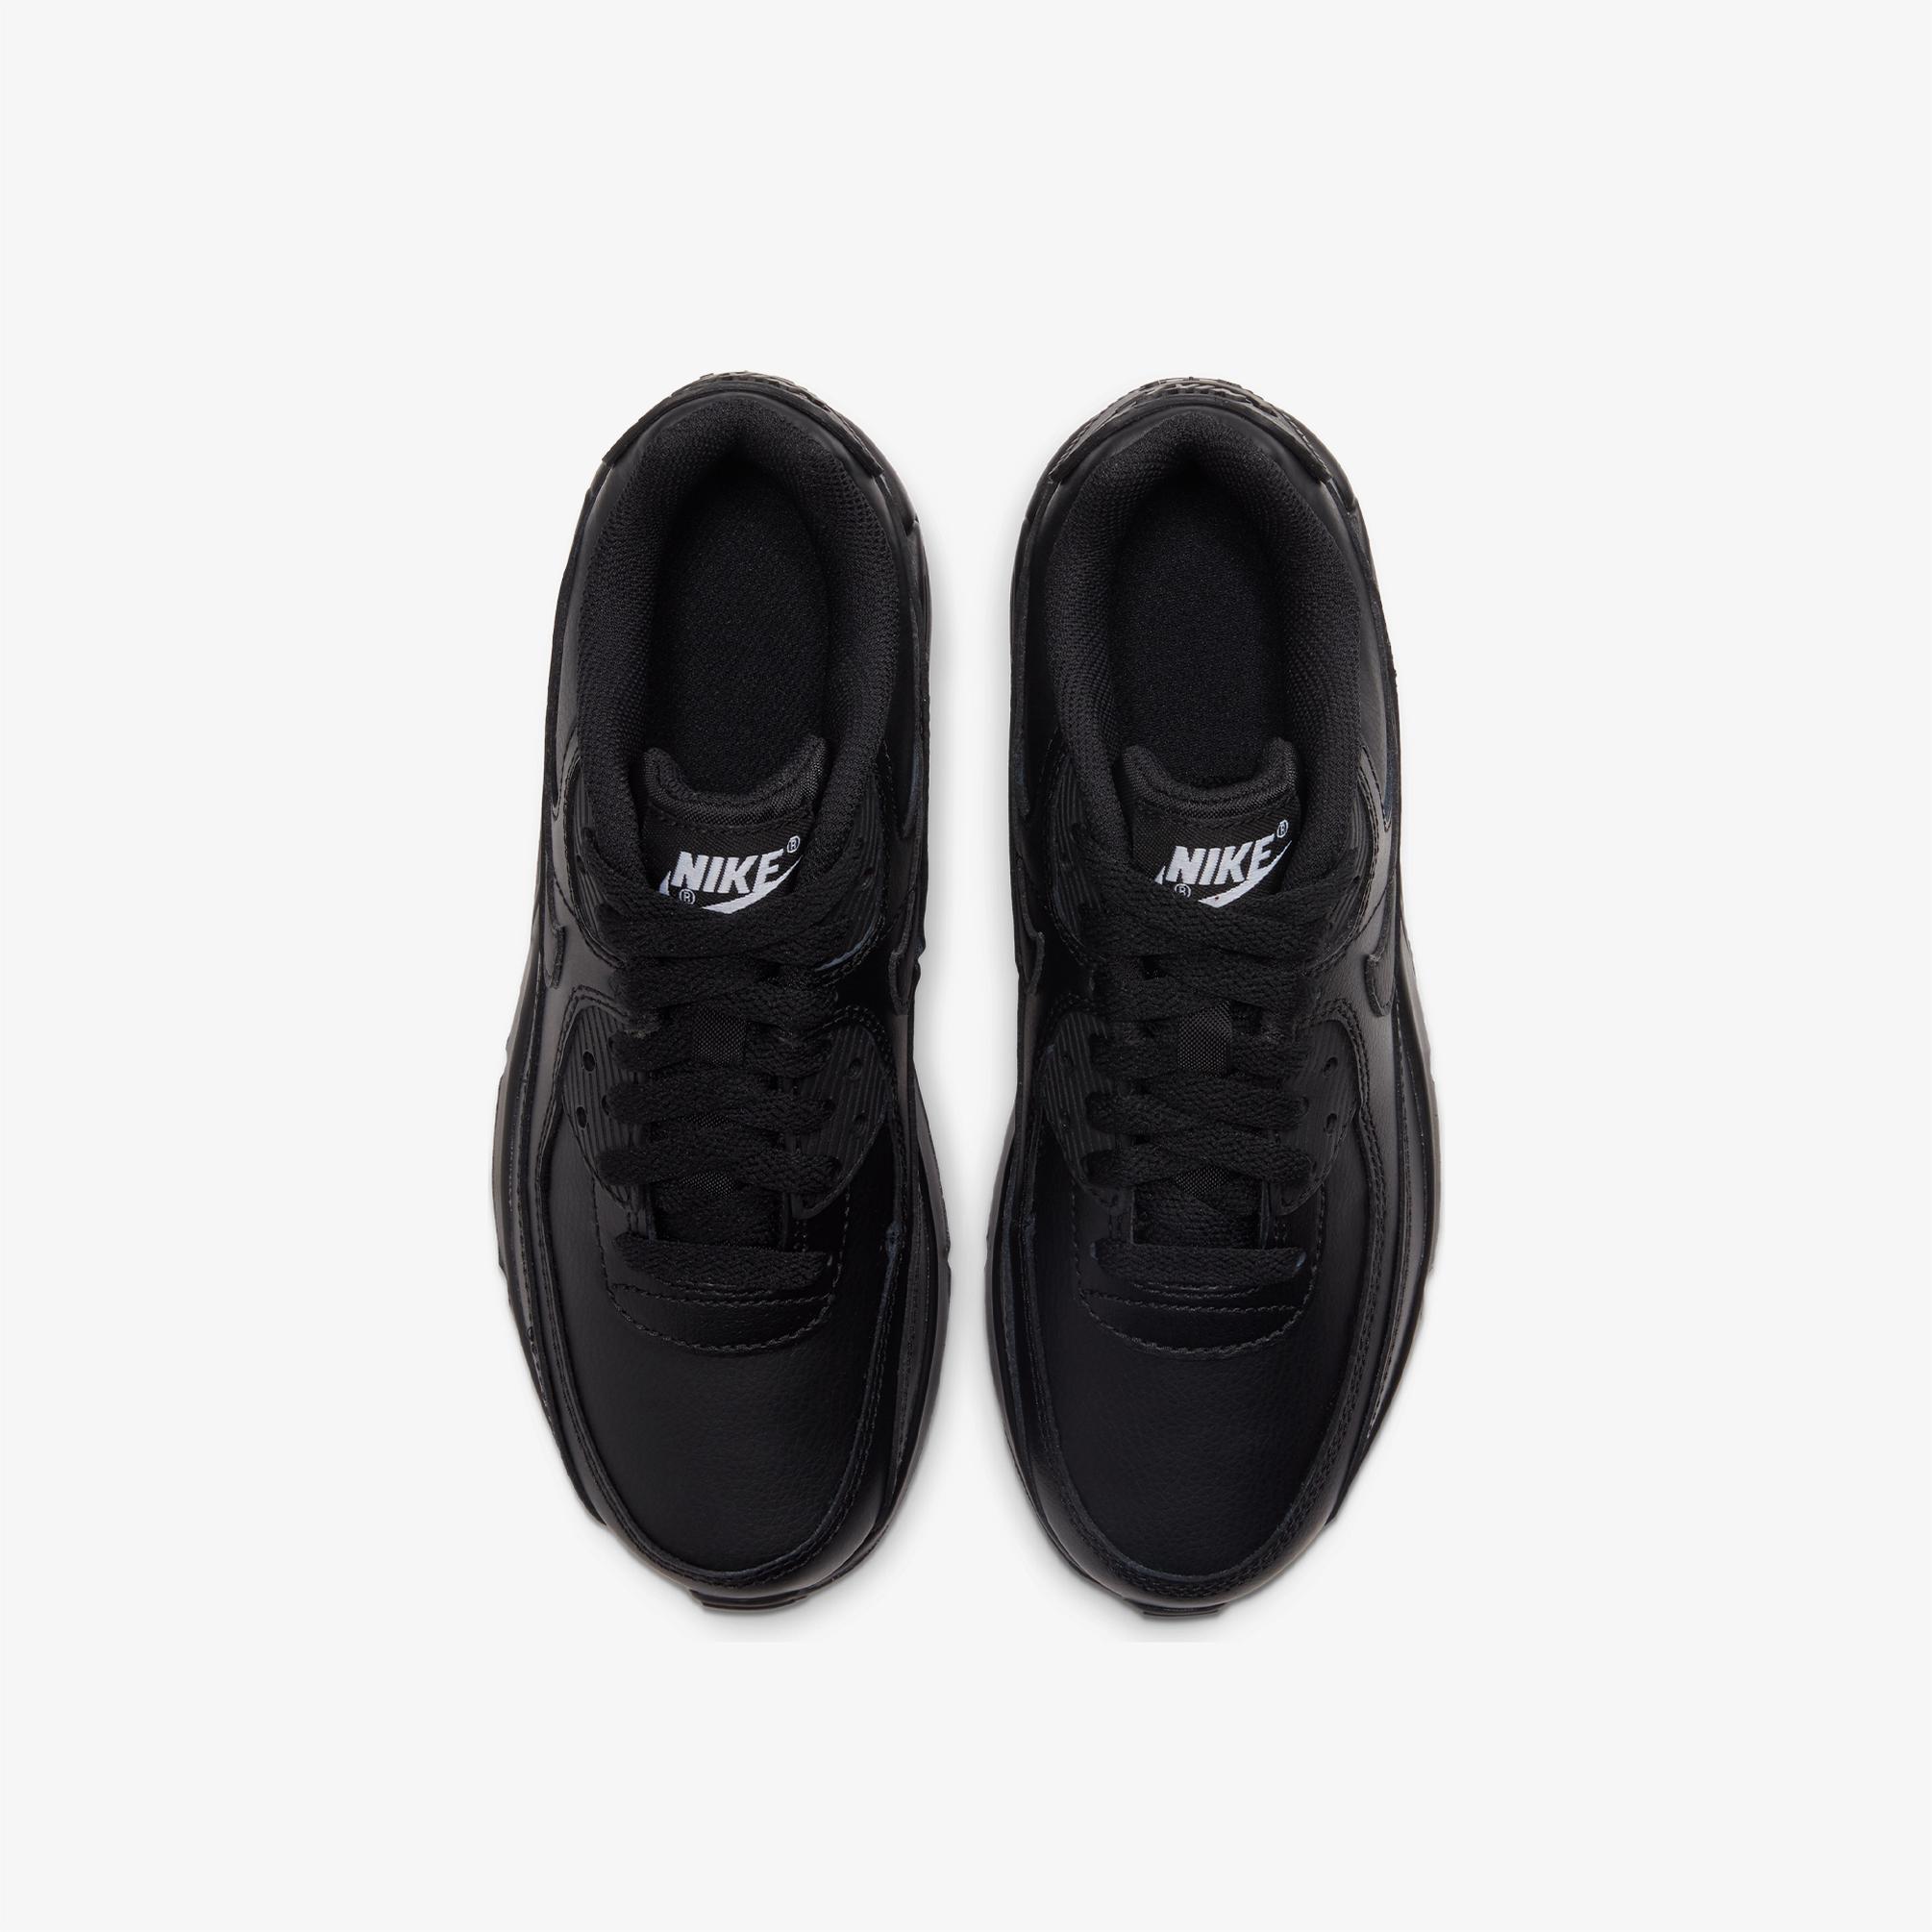  Nike Air Max 90 Kadın Siyah Spor Ayakkabı